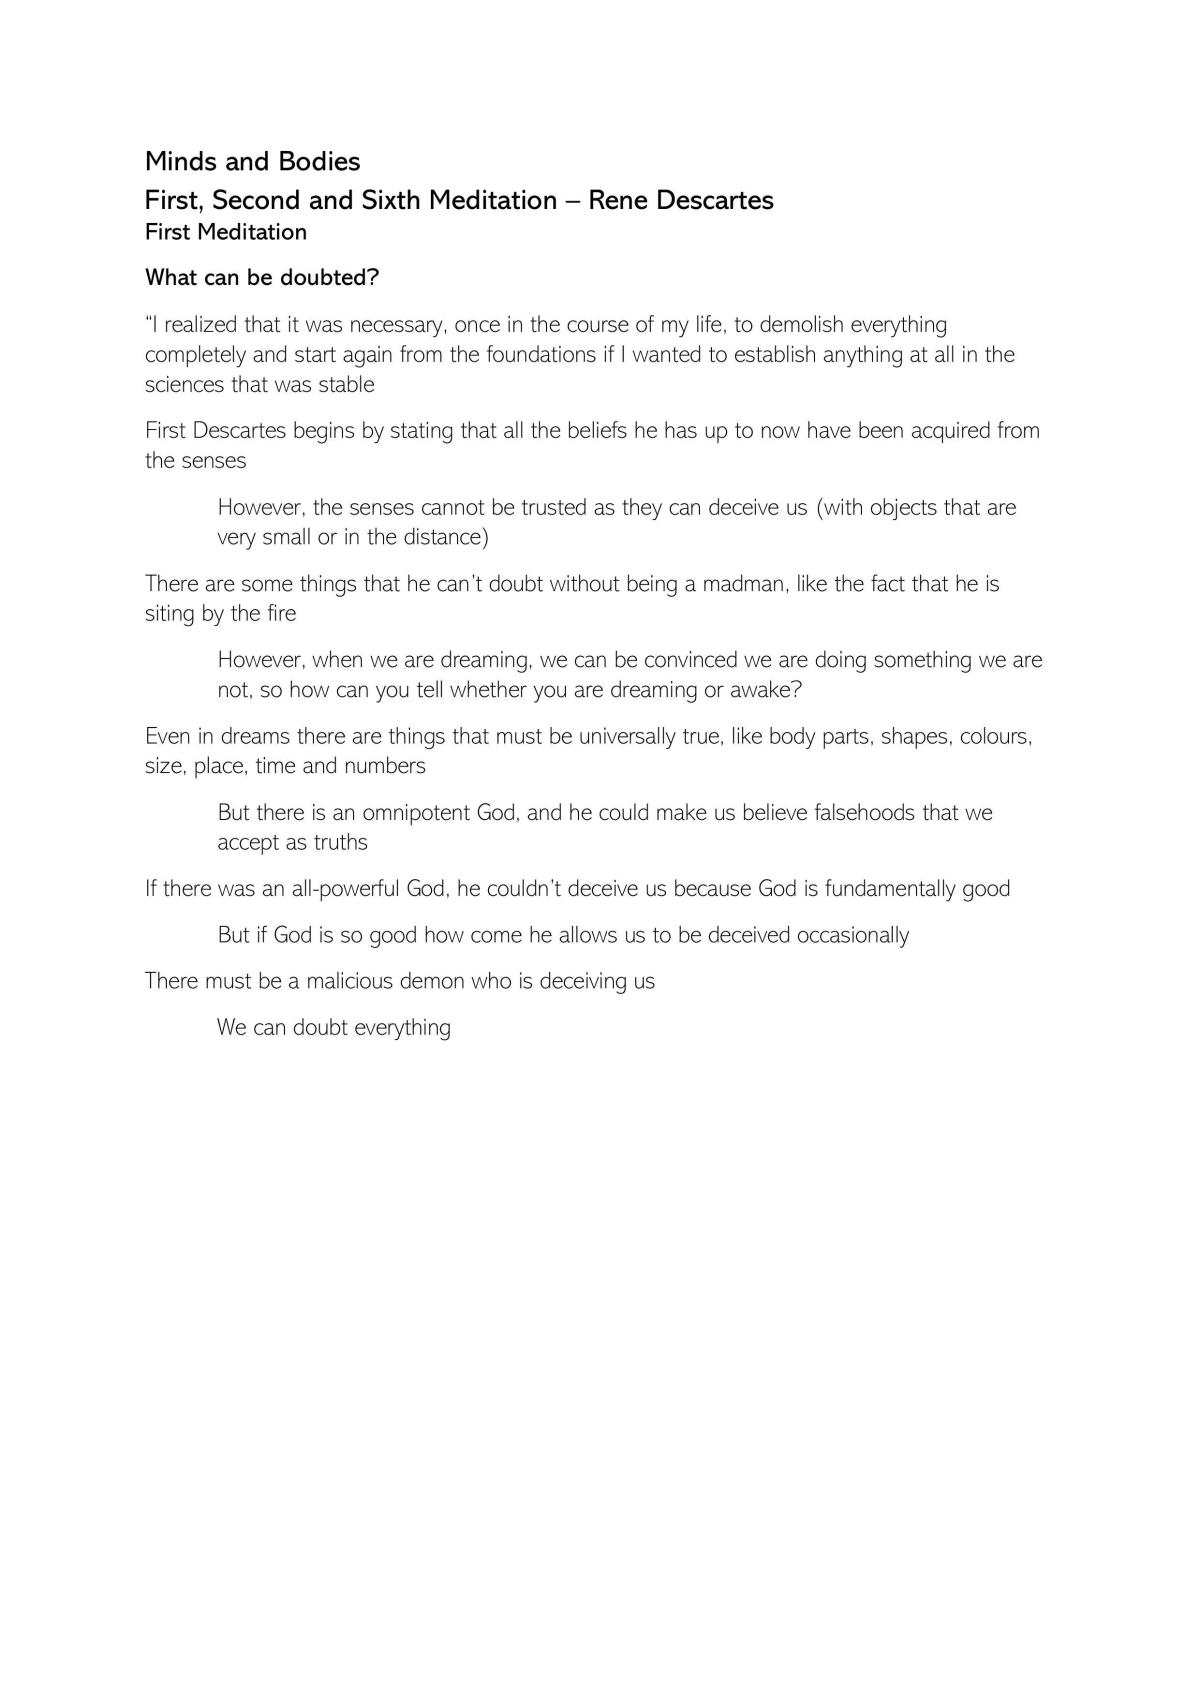 Unit 3 Philosophy Notes - Page 2